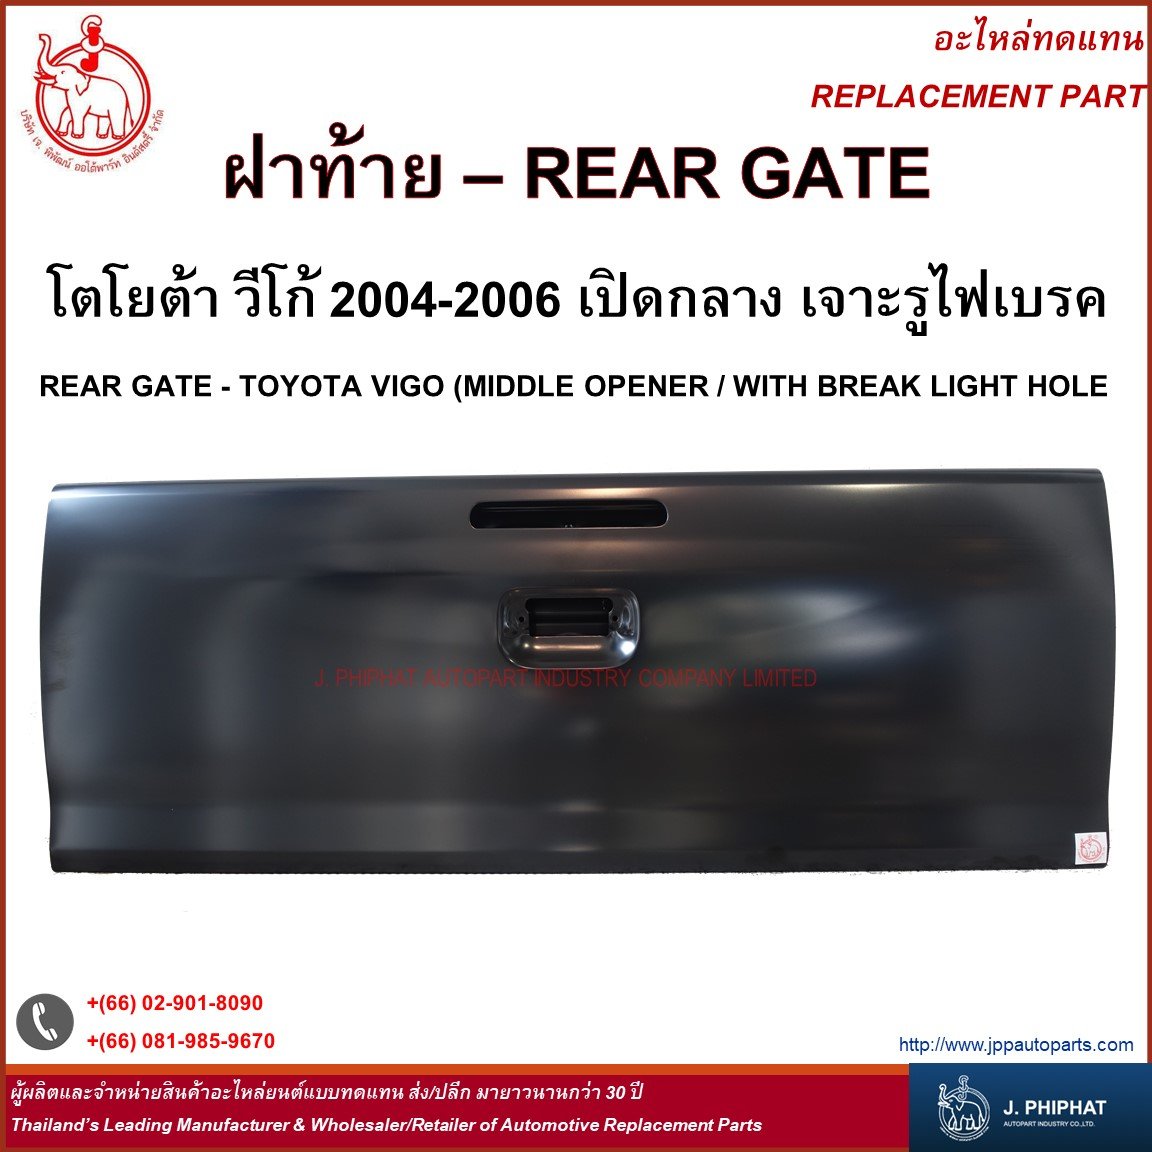 Toyota Vigo 2004 - 2006 (Middle Opener/with break light hole)